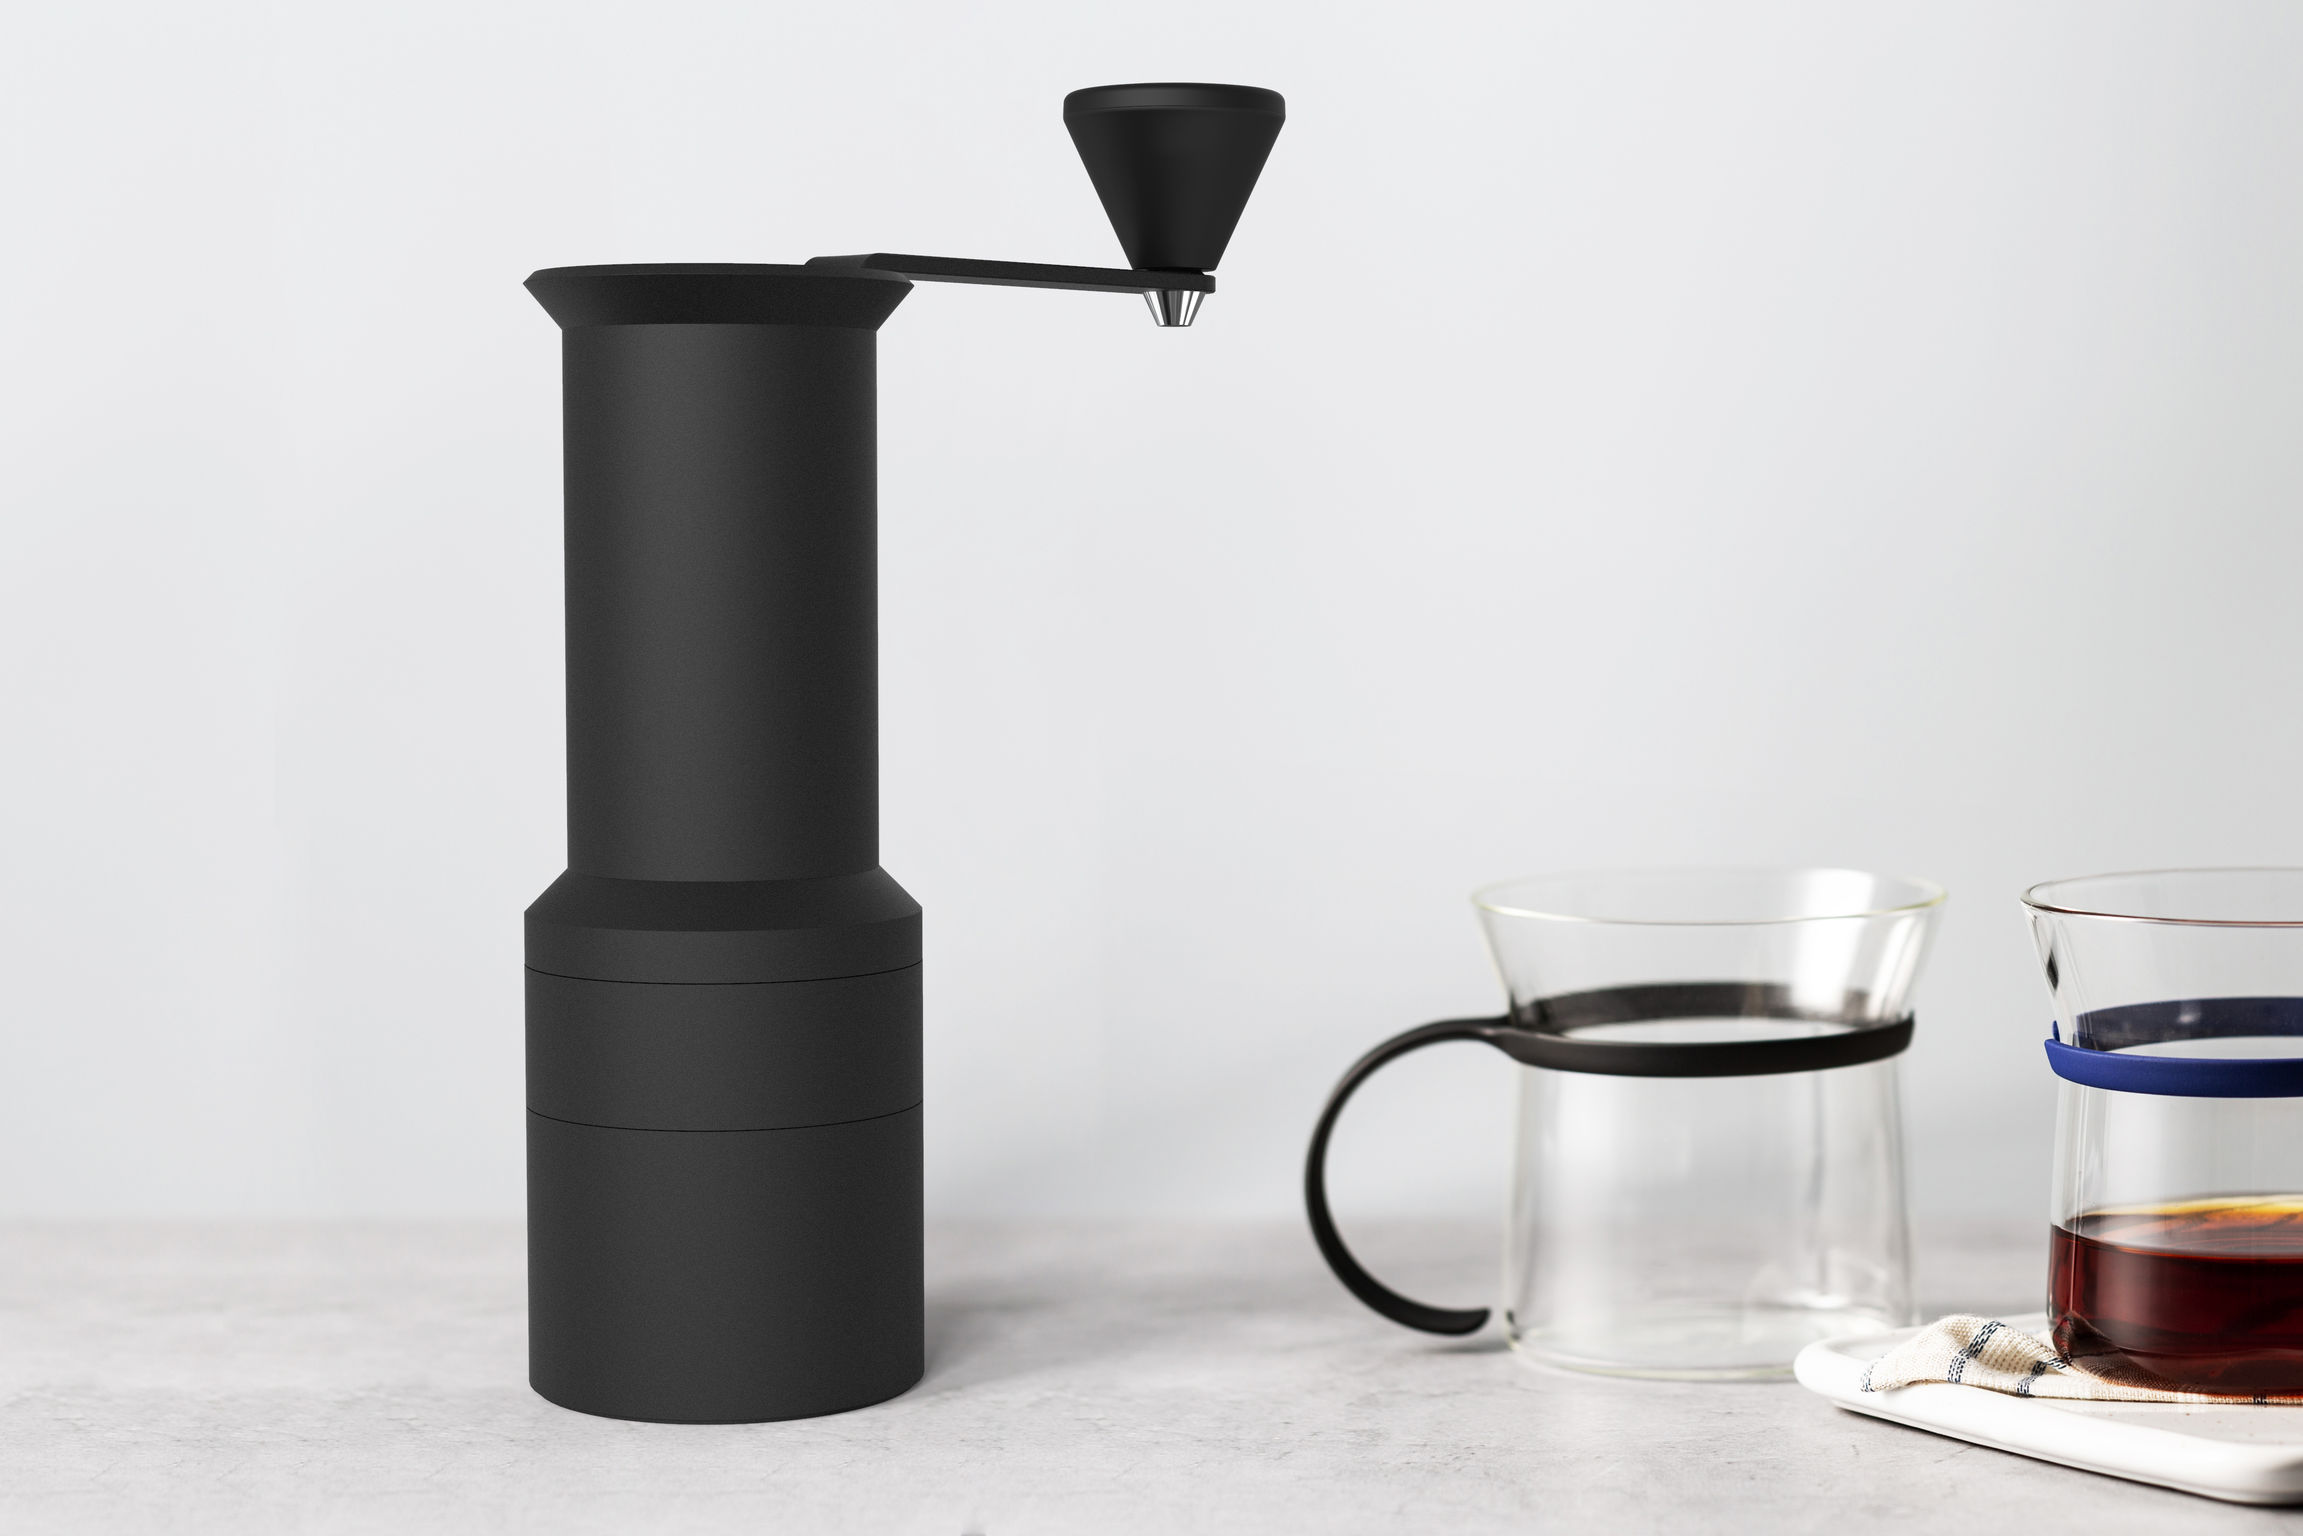 Samurai manual coffee grinder